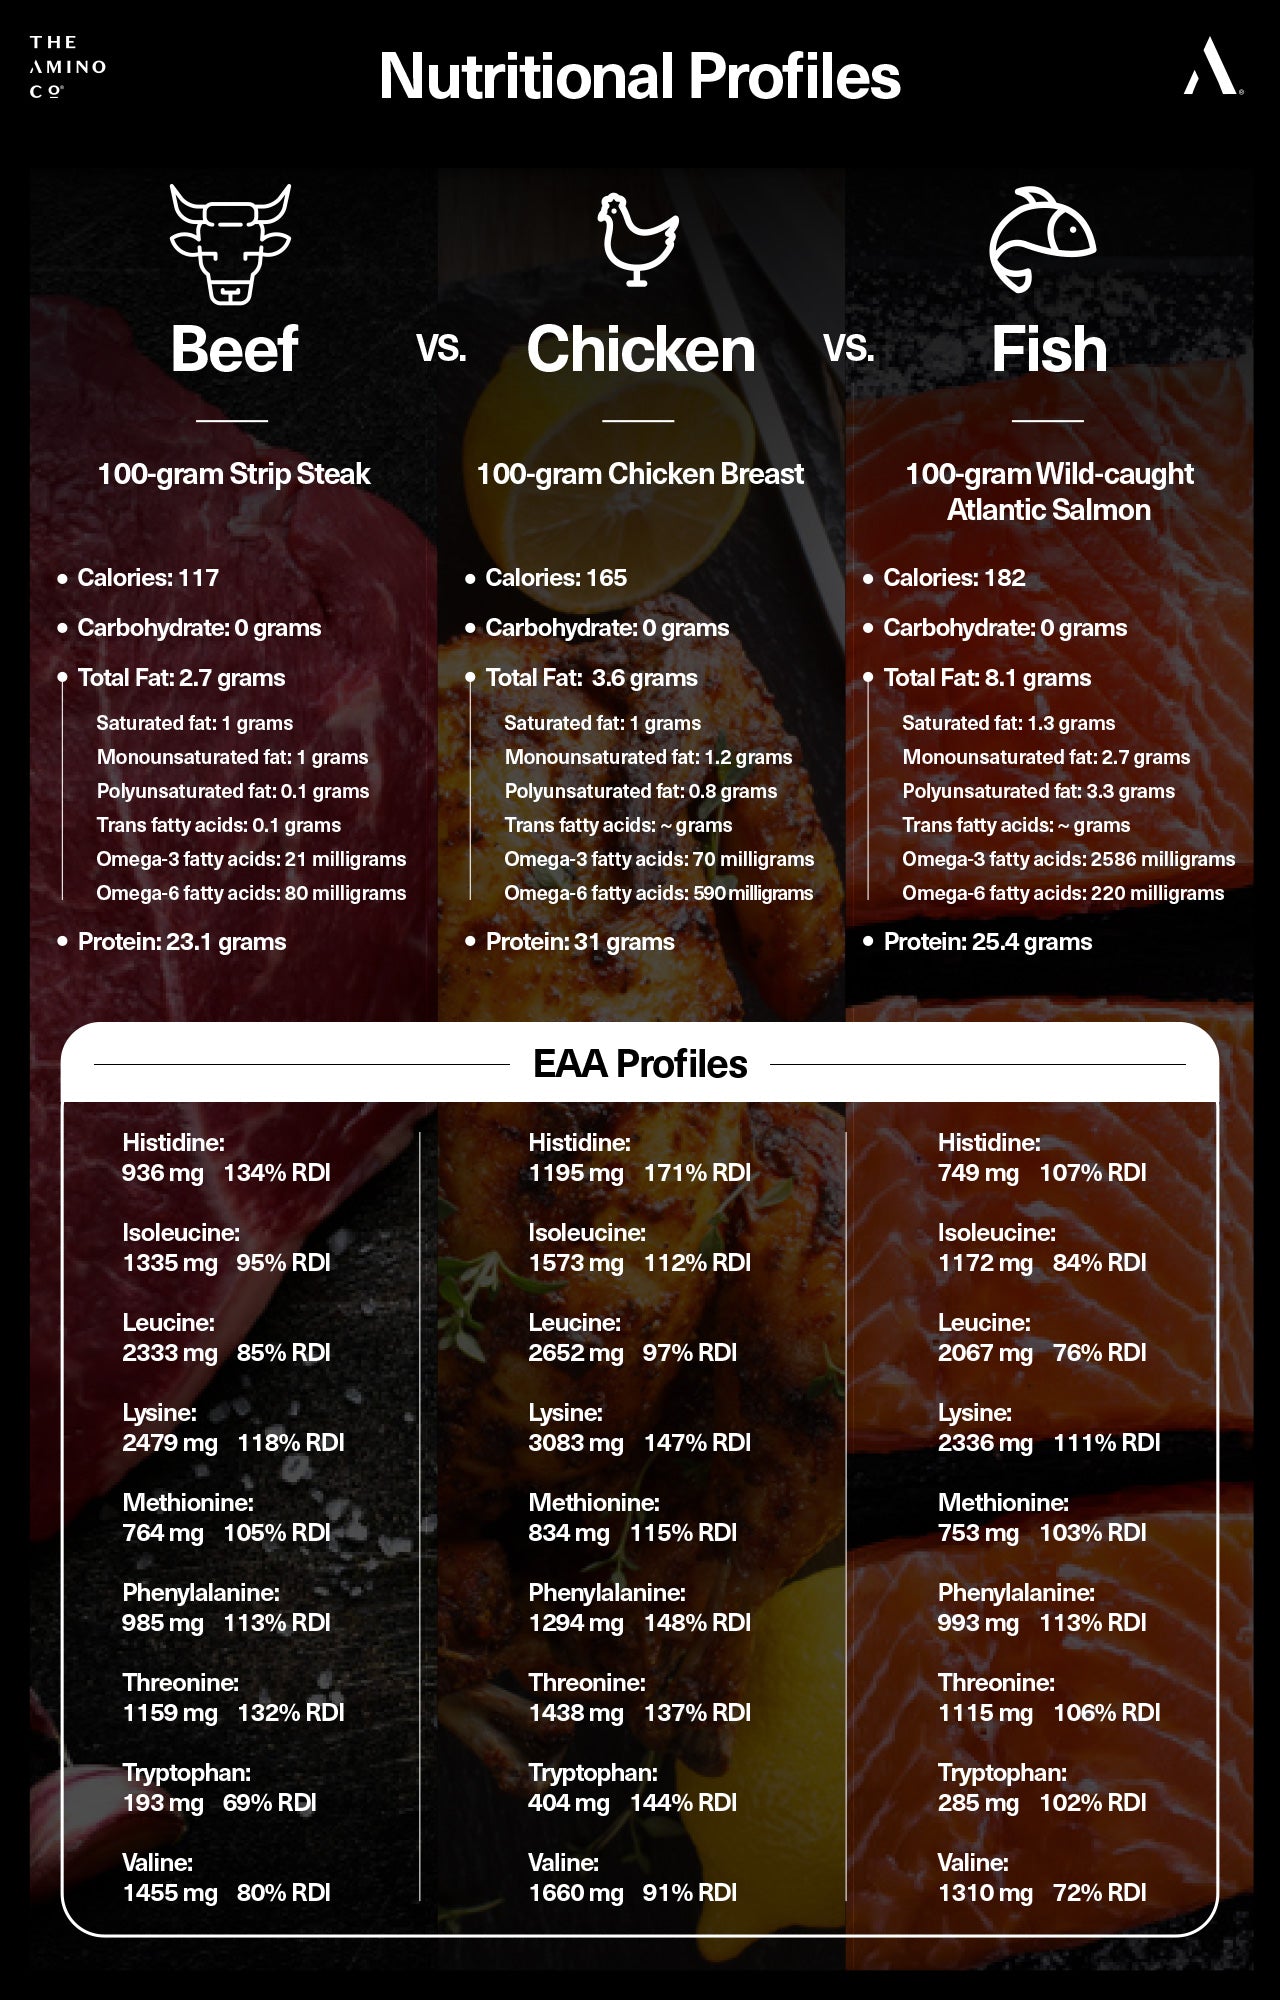 Beef vs. Chicken vs. Fish Nutritional Profiles